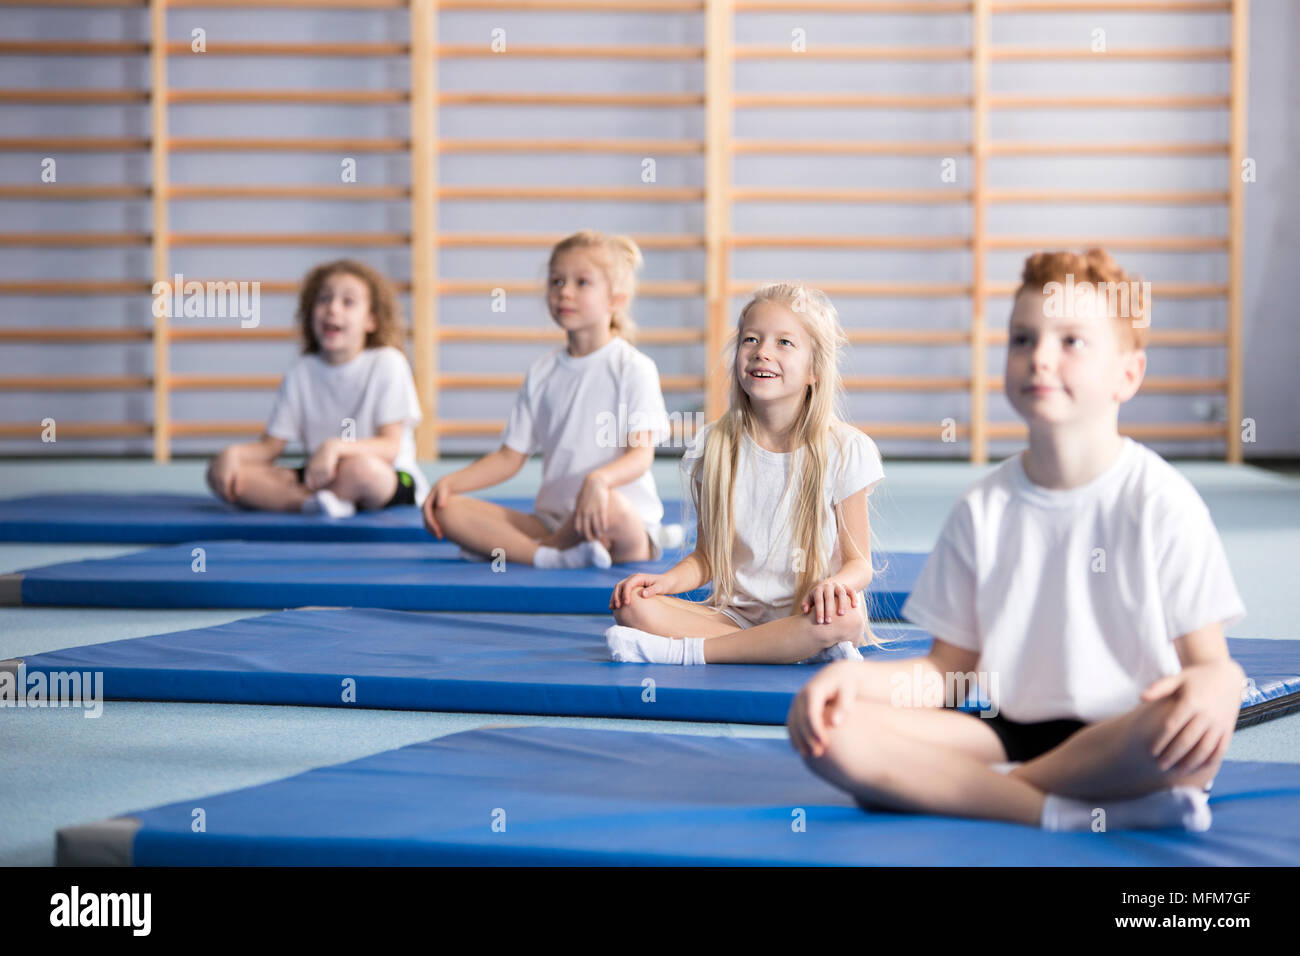 Focused pupils sitting cross-legged on blue mats during gymnastics class Stock Photo